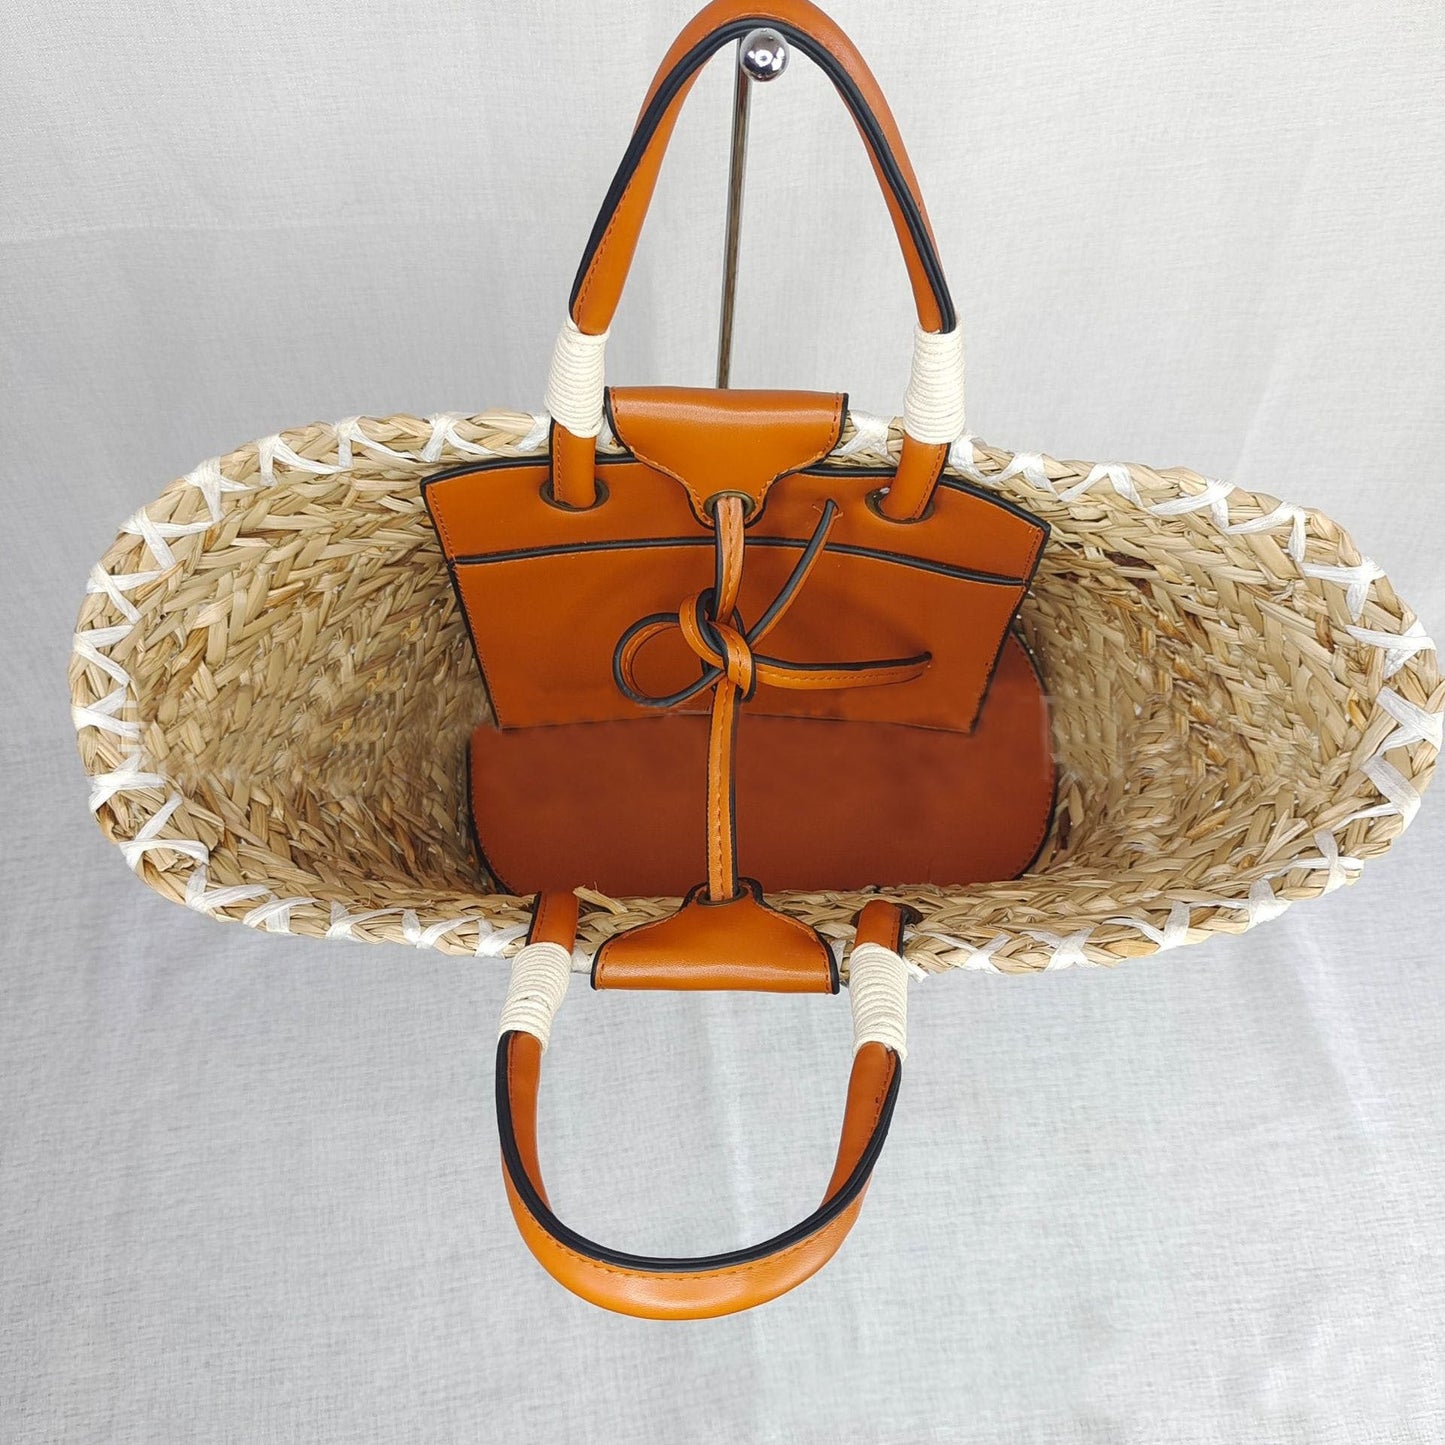 Big Eyes PU Leather-Timmed Woven Raffia Tote Basket Bag